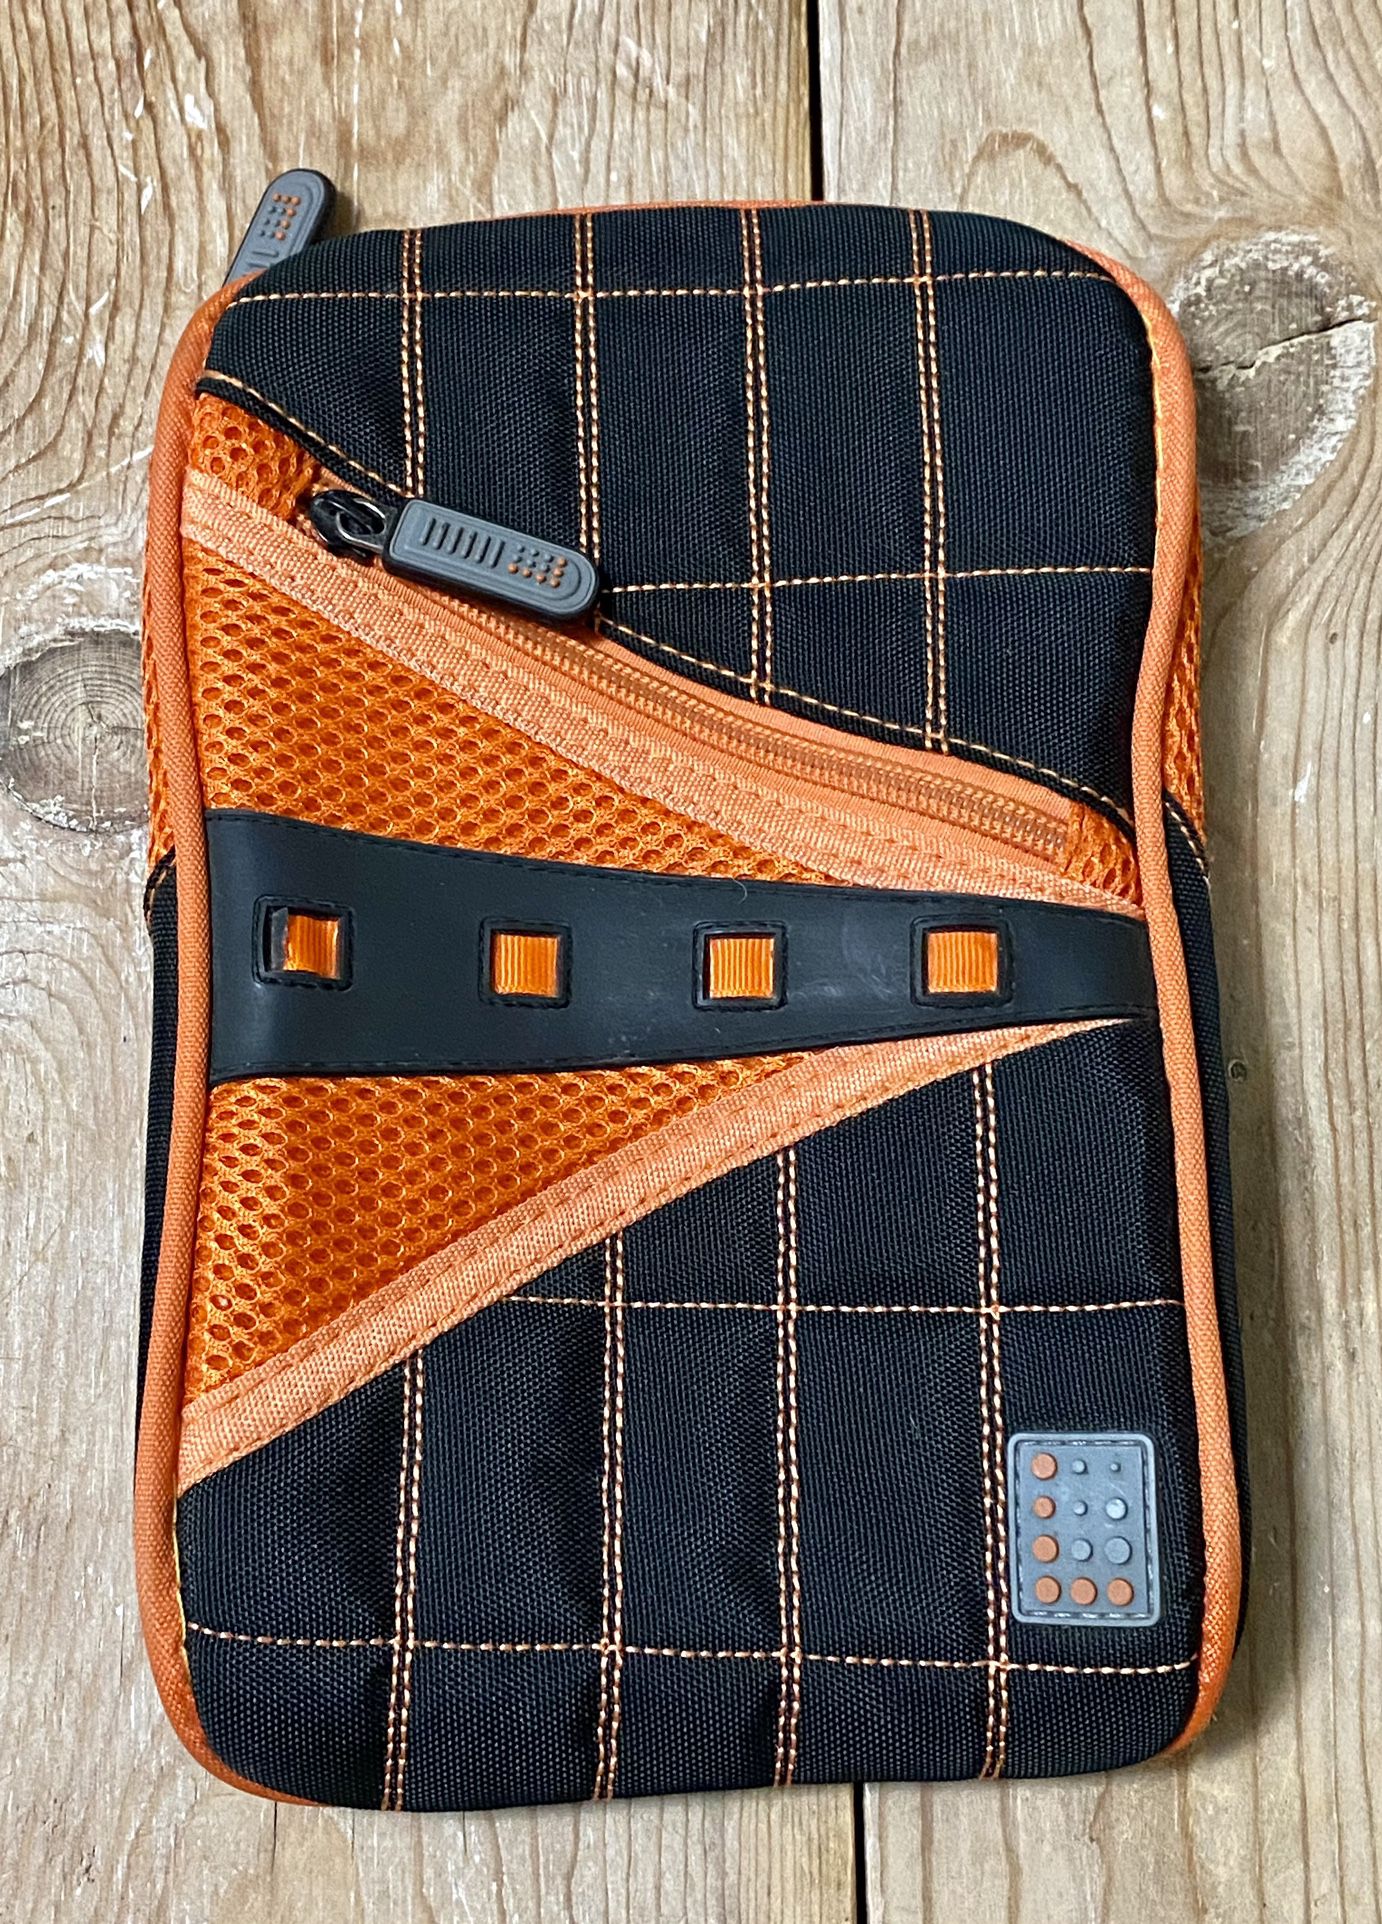 Lifeworks Universal Tablet Sleeve Carrying Case 6 - 7" Sporty Orange/Black EUC